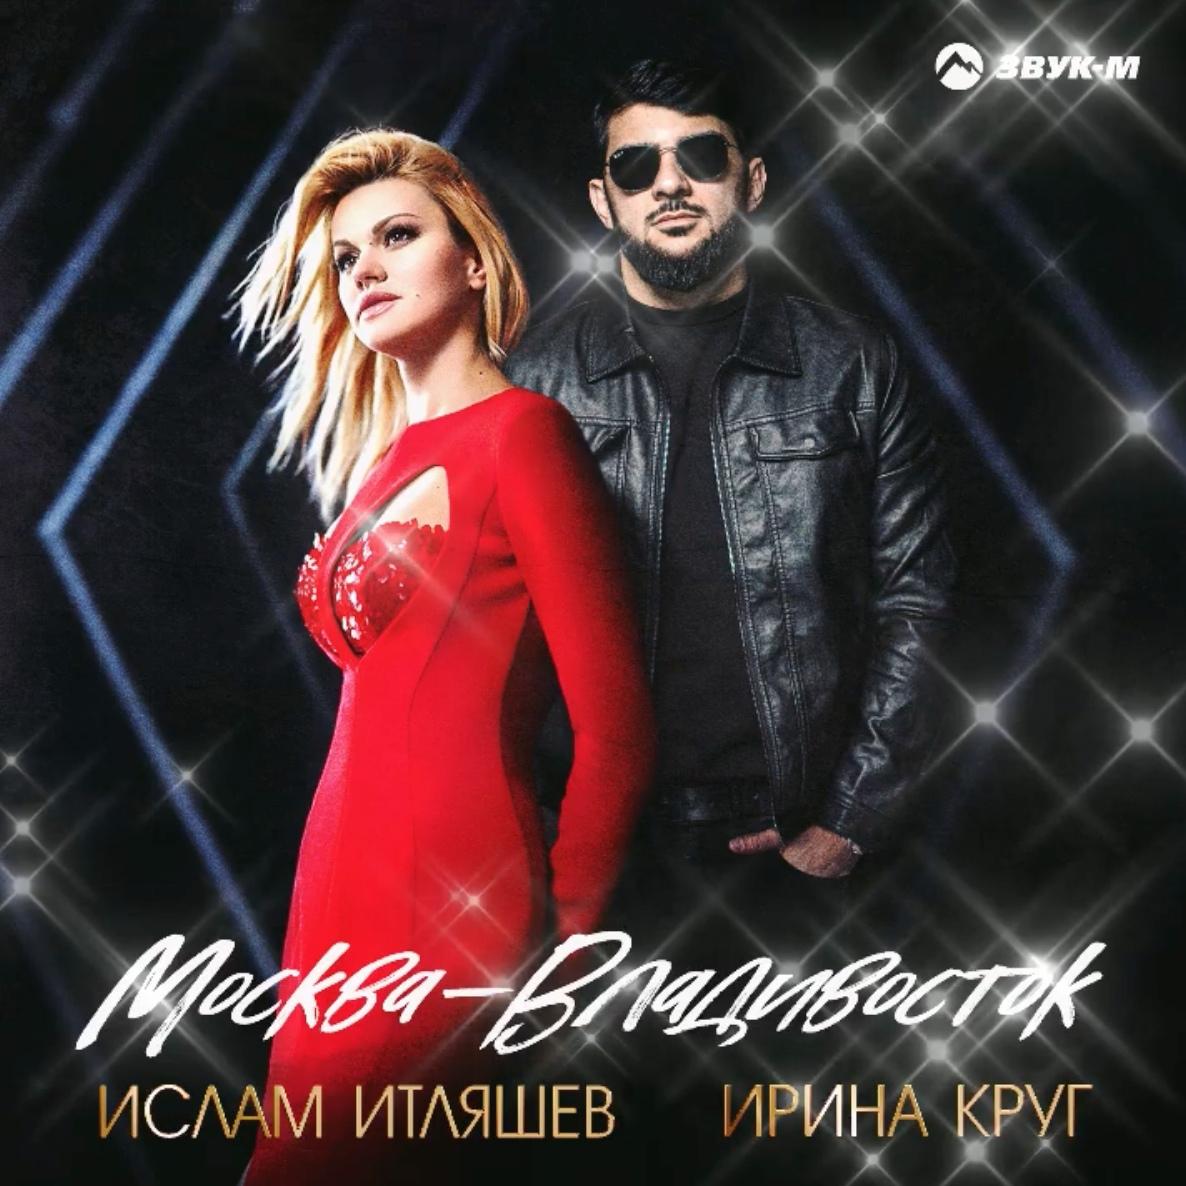 Ирина Круг и Ислам Итляшев представляют премьеру песни «Москва-Владивосток»